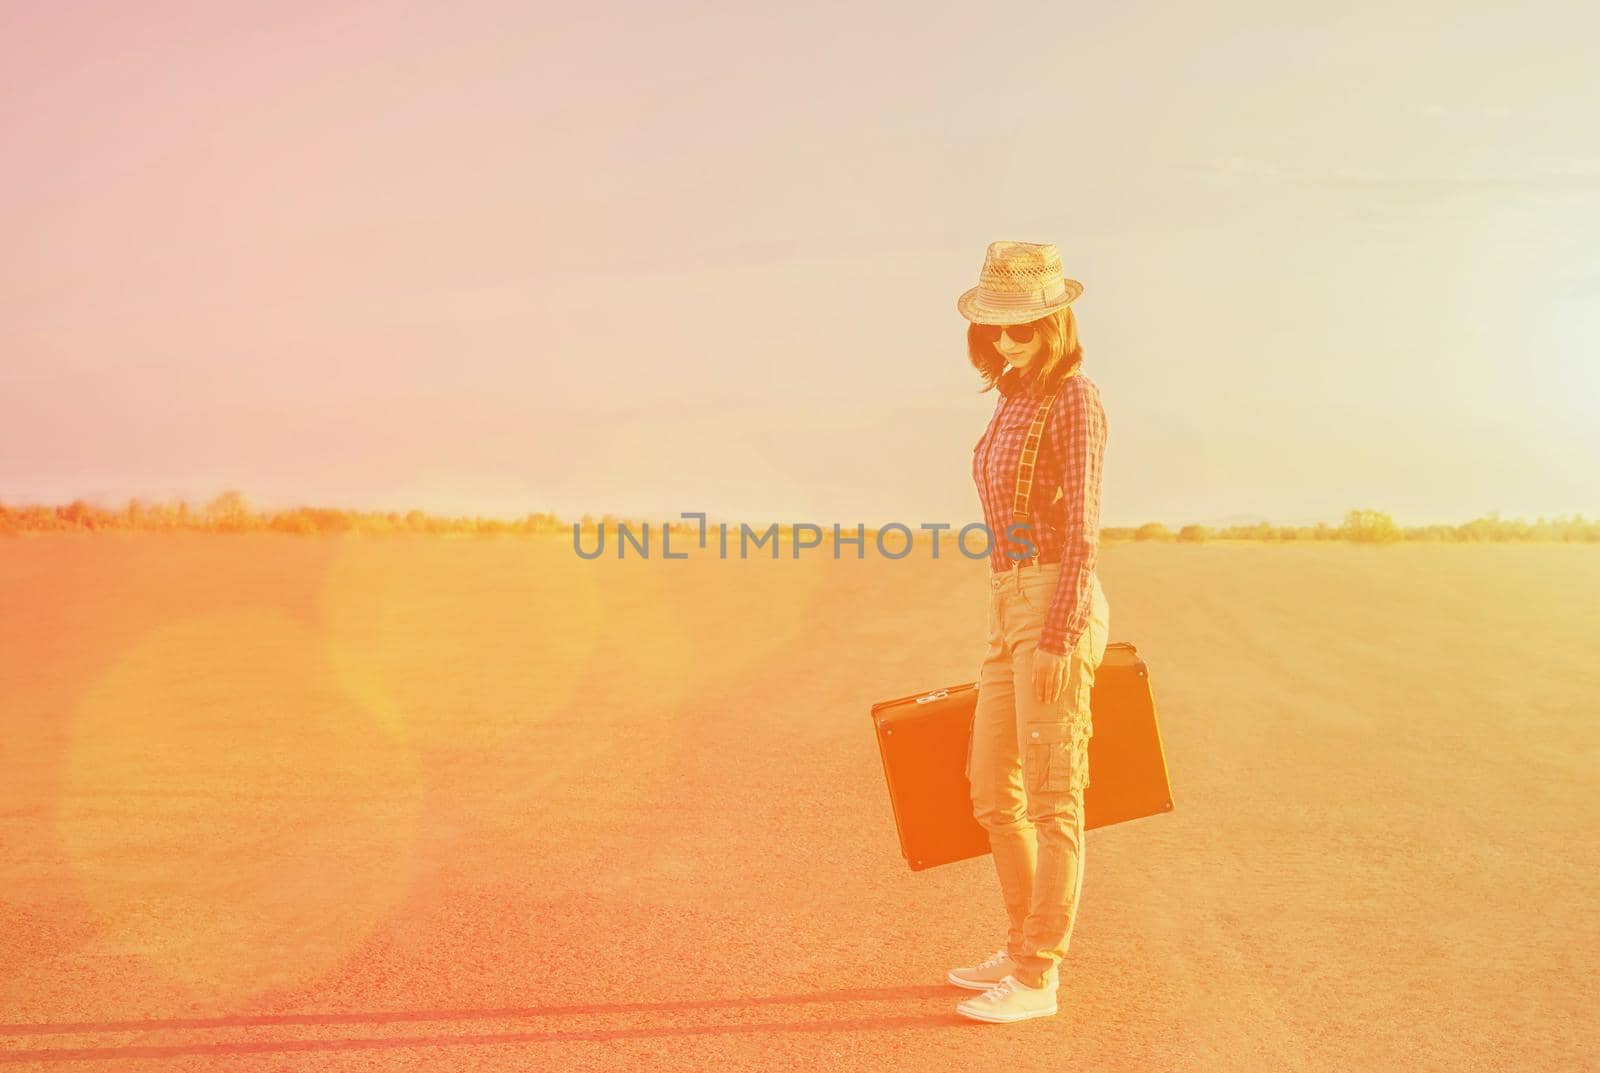 Traveler girl standing on road in summer by alexAleksei